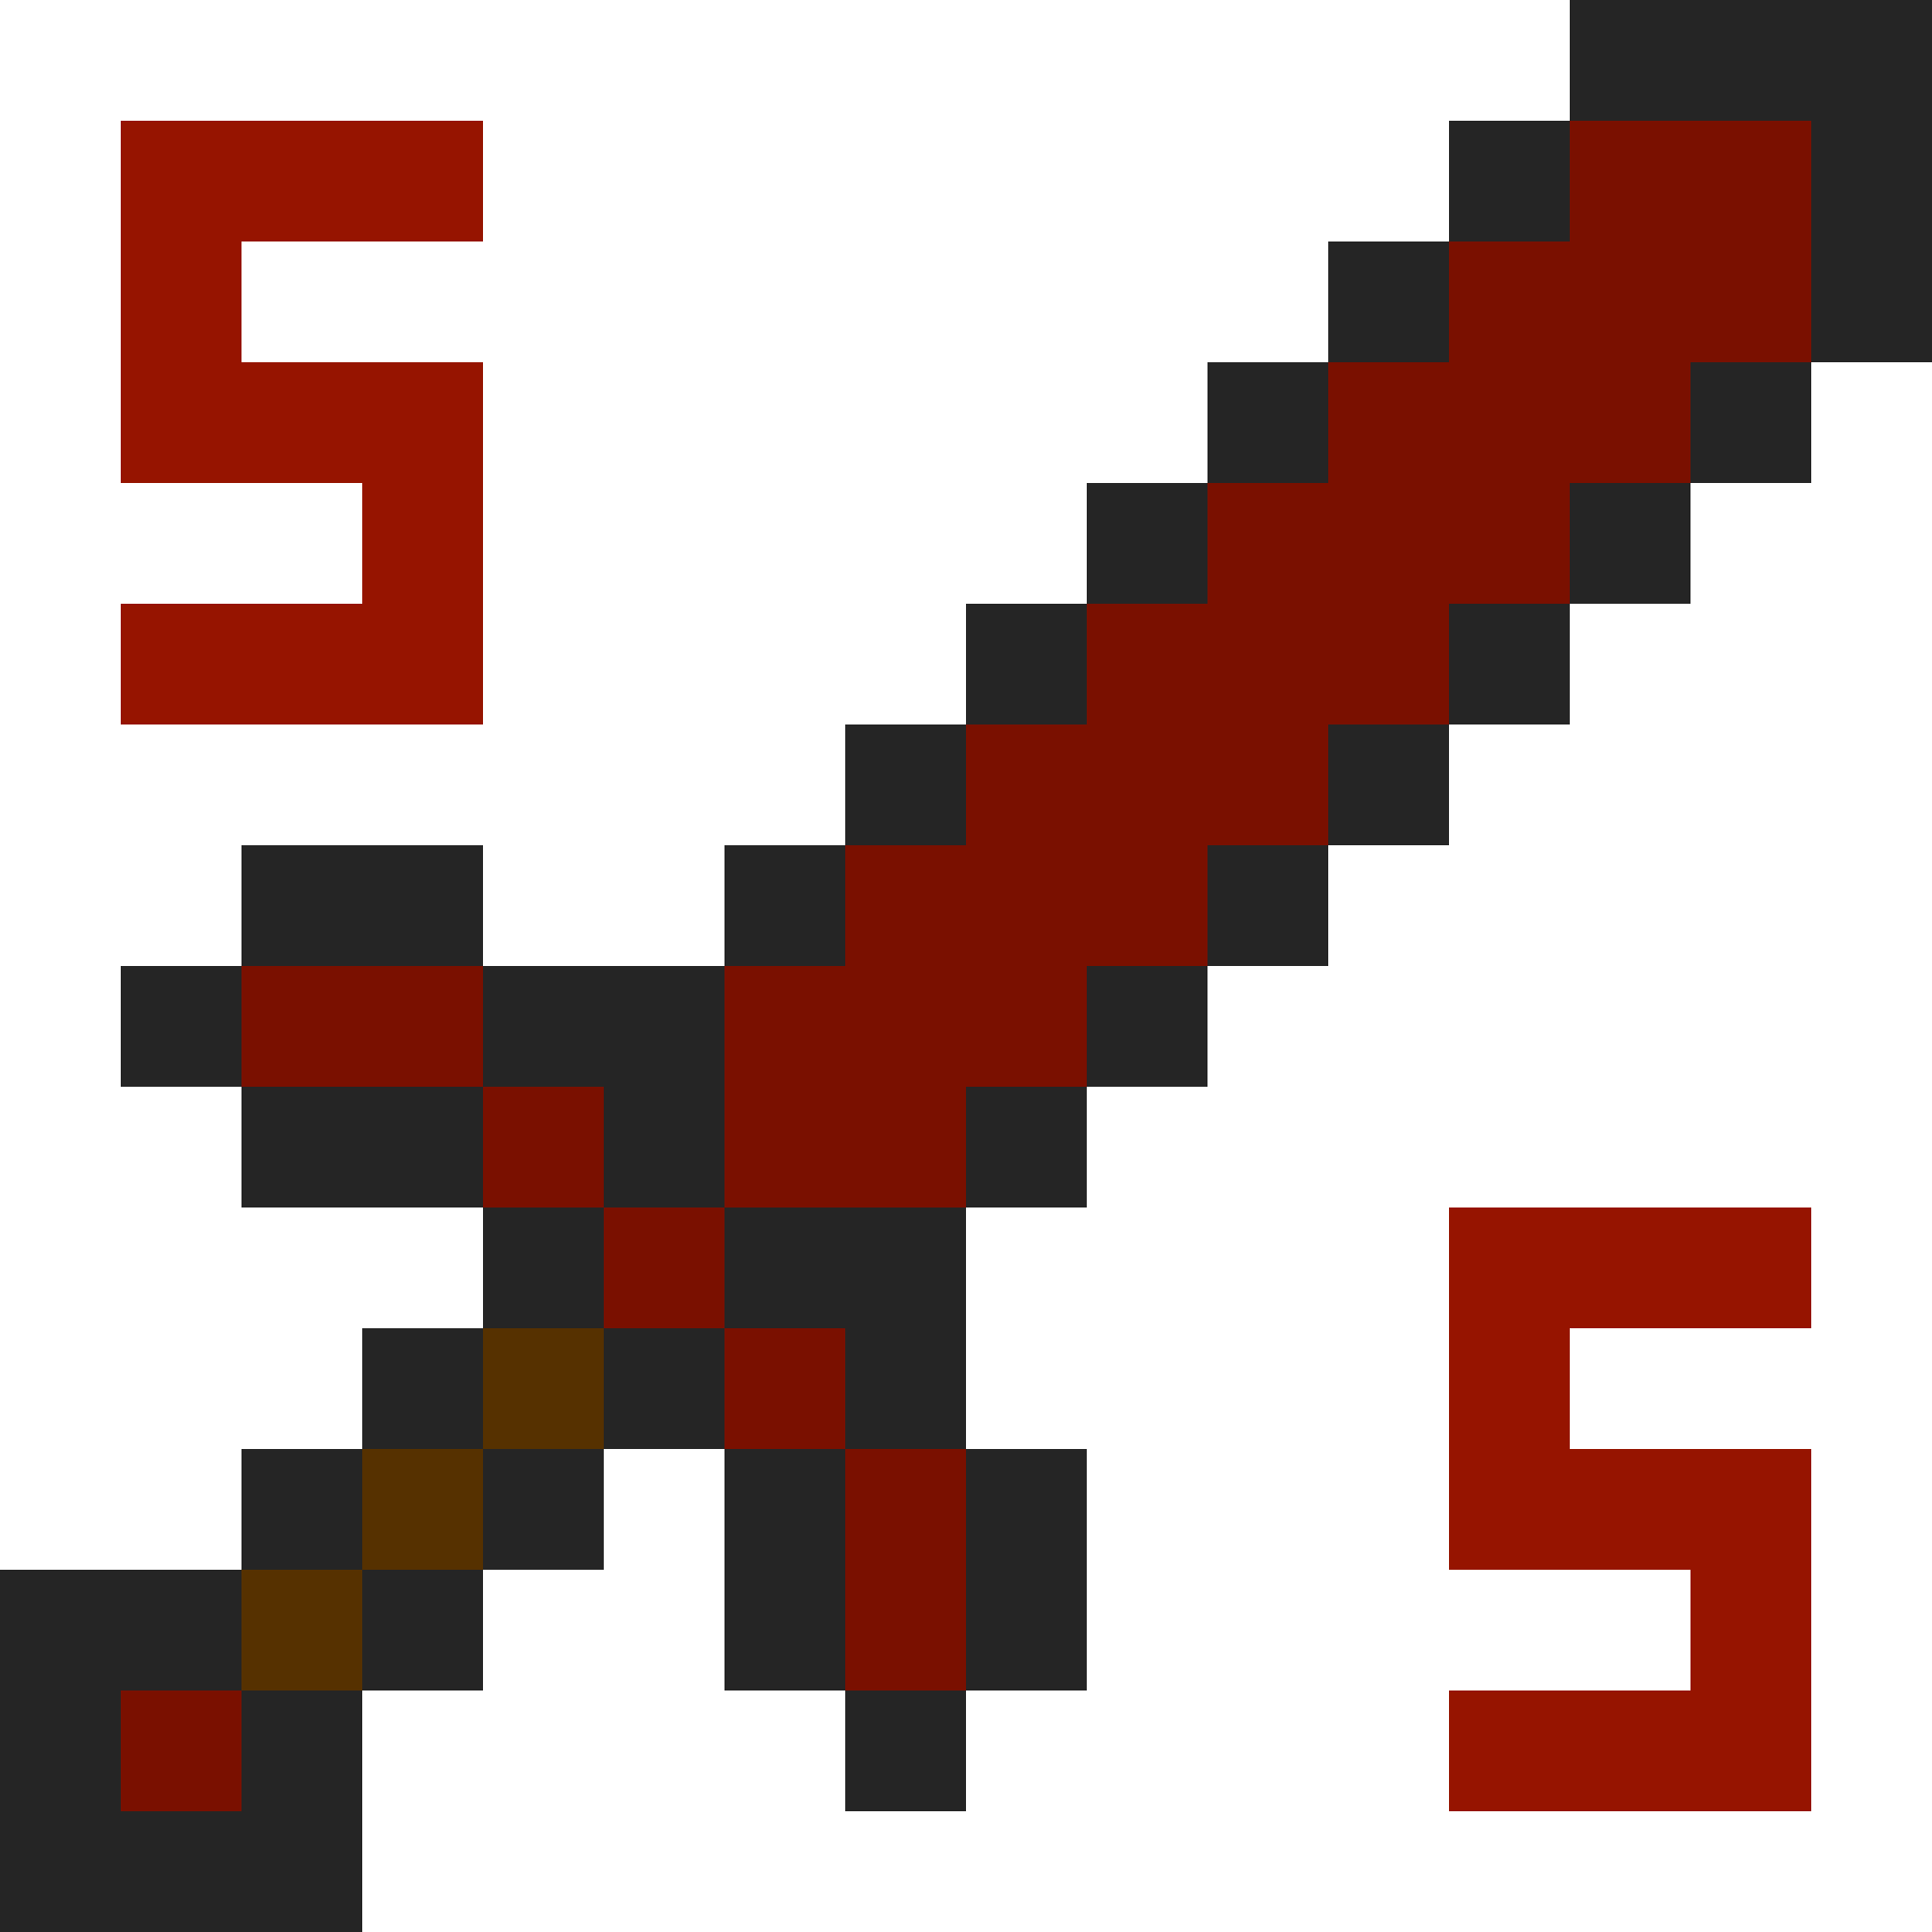 Super Swords Mod for Minecraft 1.12.2